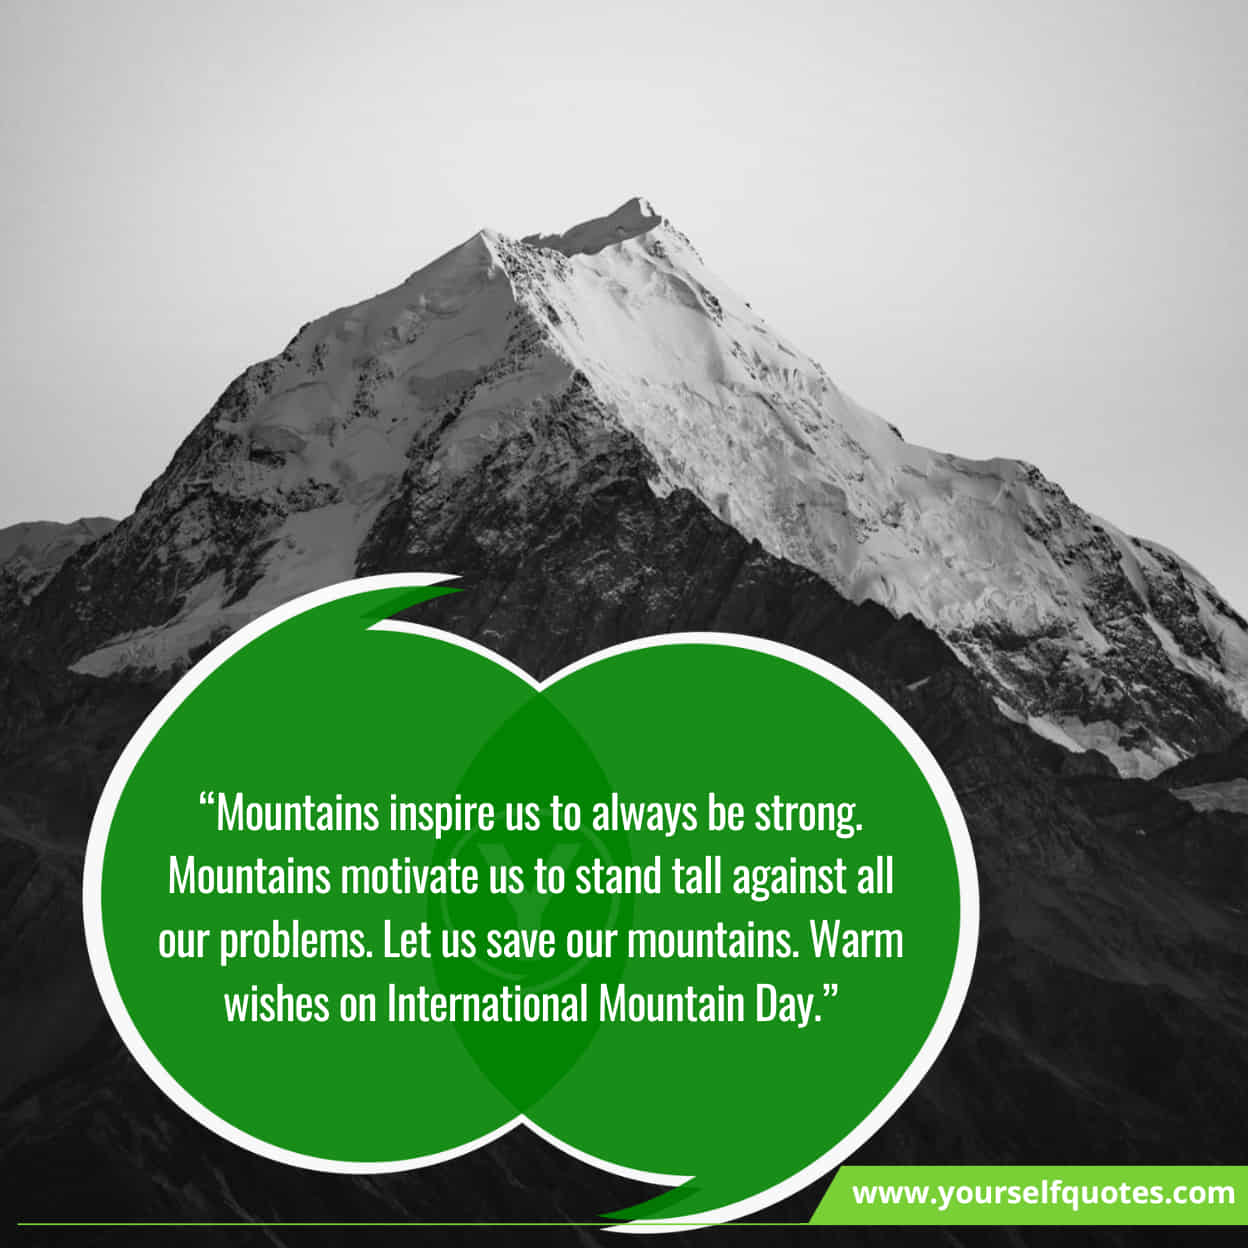 Inspiring International Mountain Day Wishes